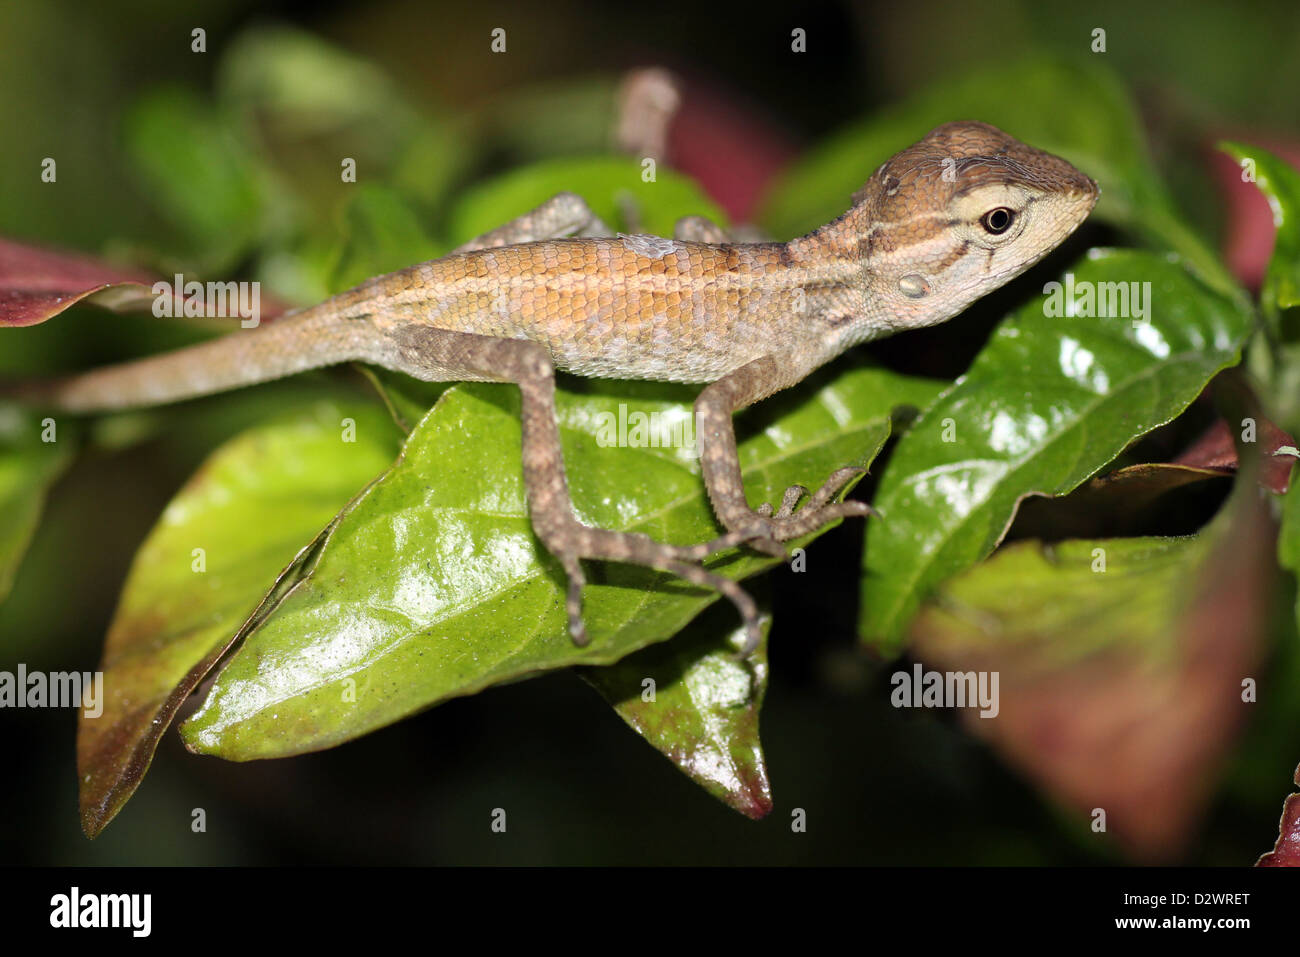 Small Sri Lankan Lizard Stock Photo